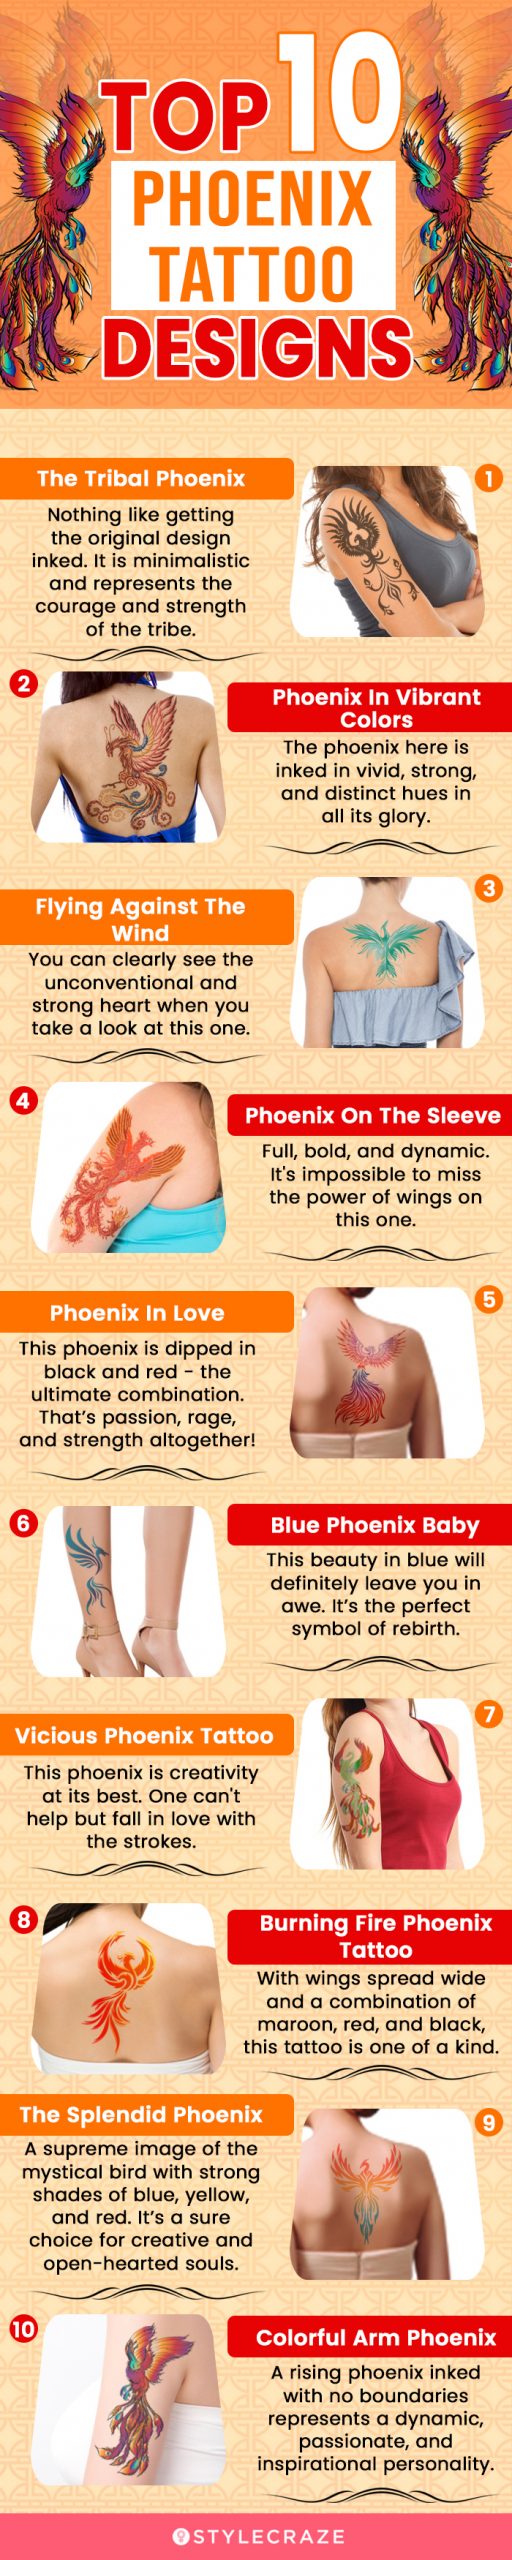 top 10 phoenix tattoo designs (infographic)